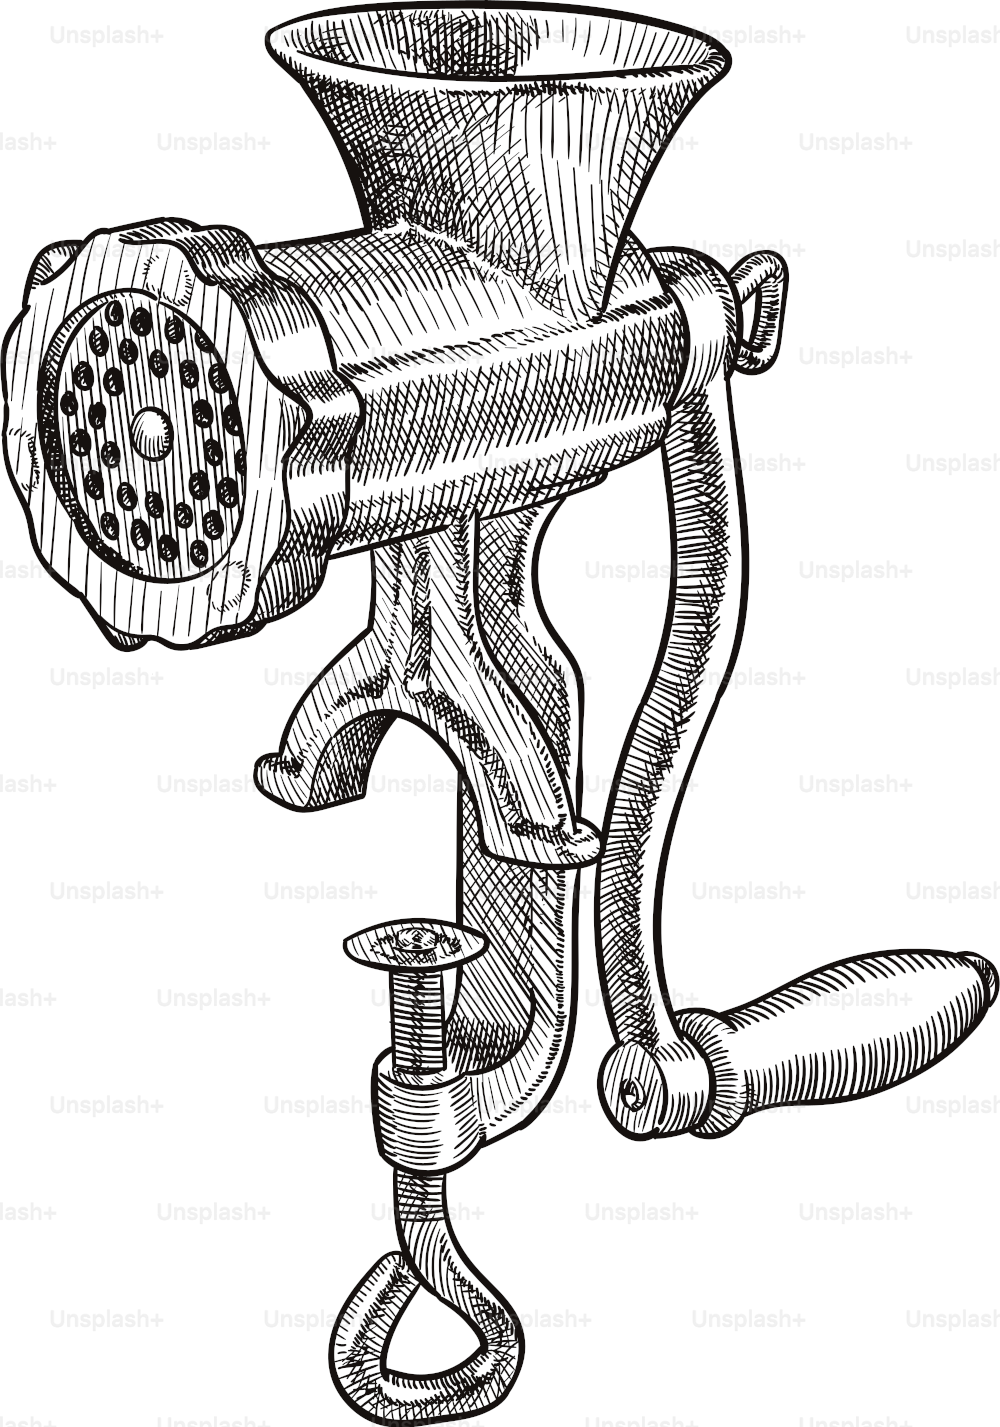 Old style illustration of a meat grinder